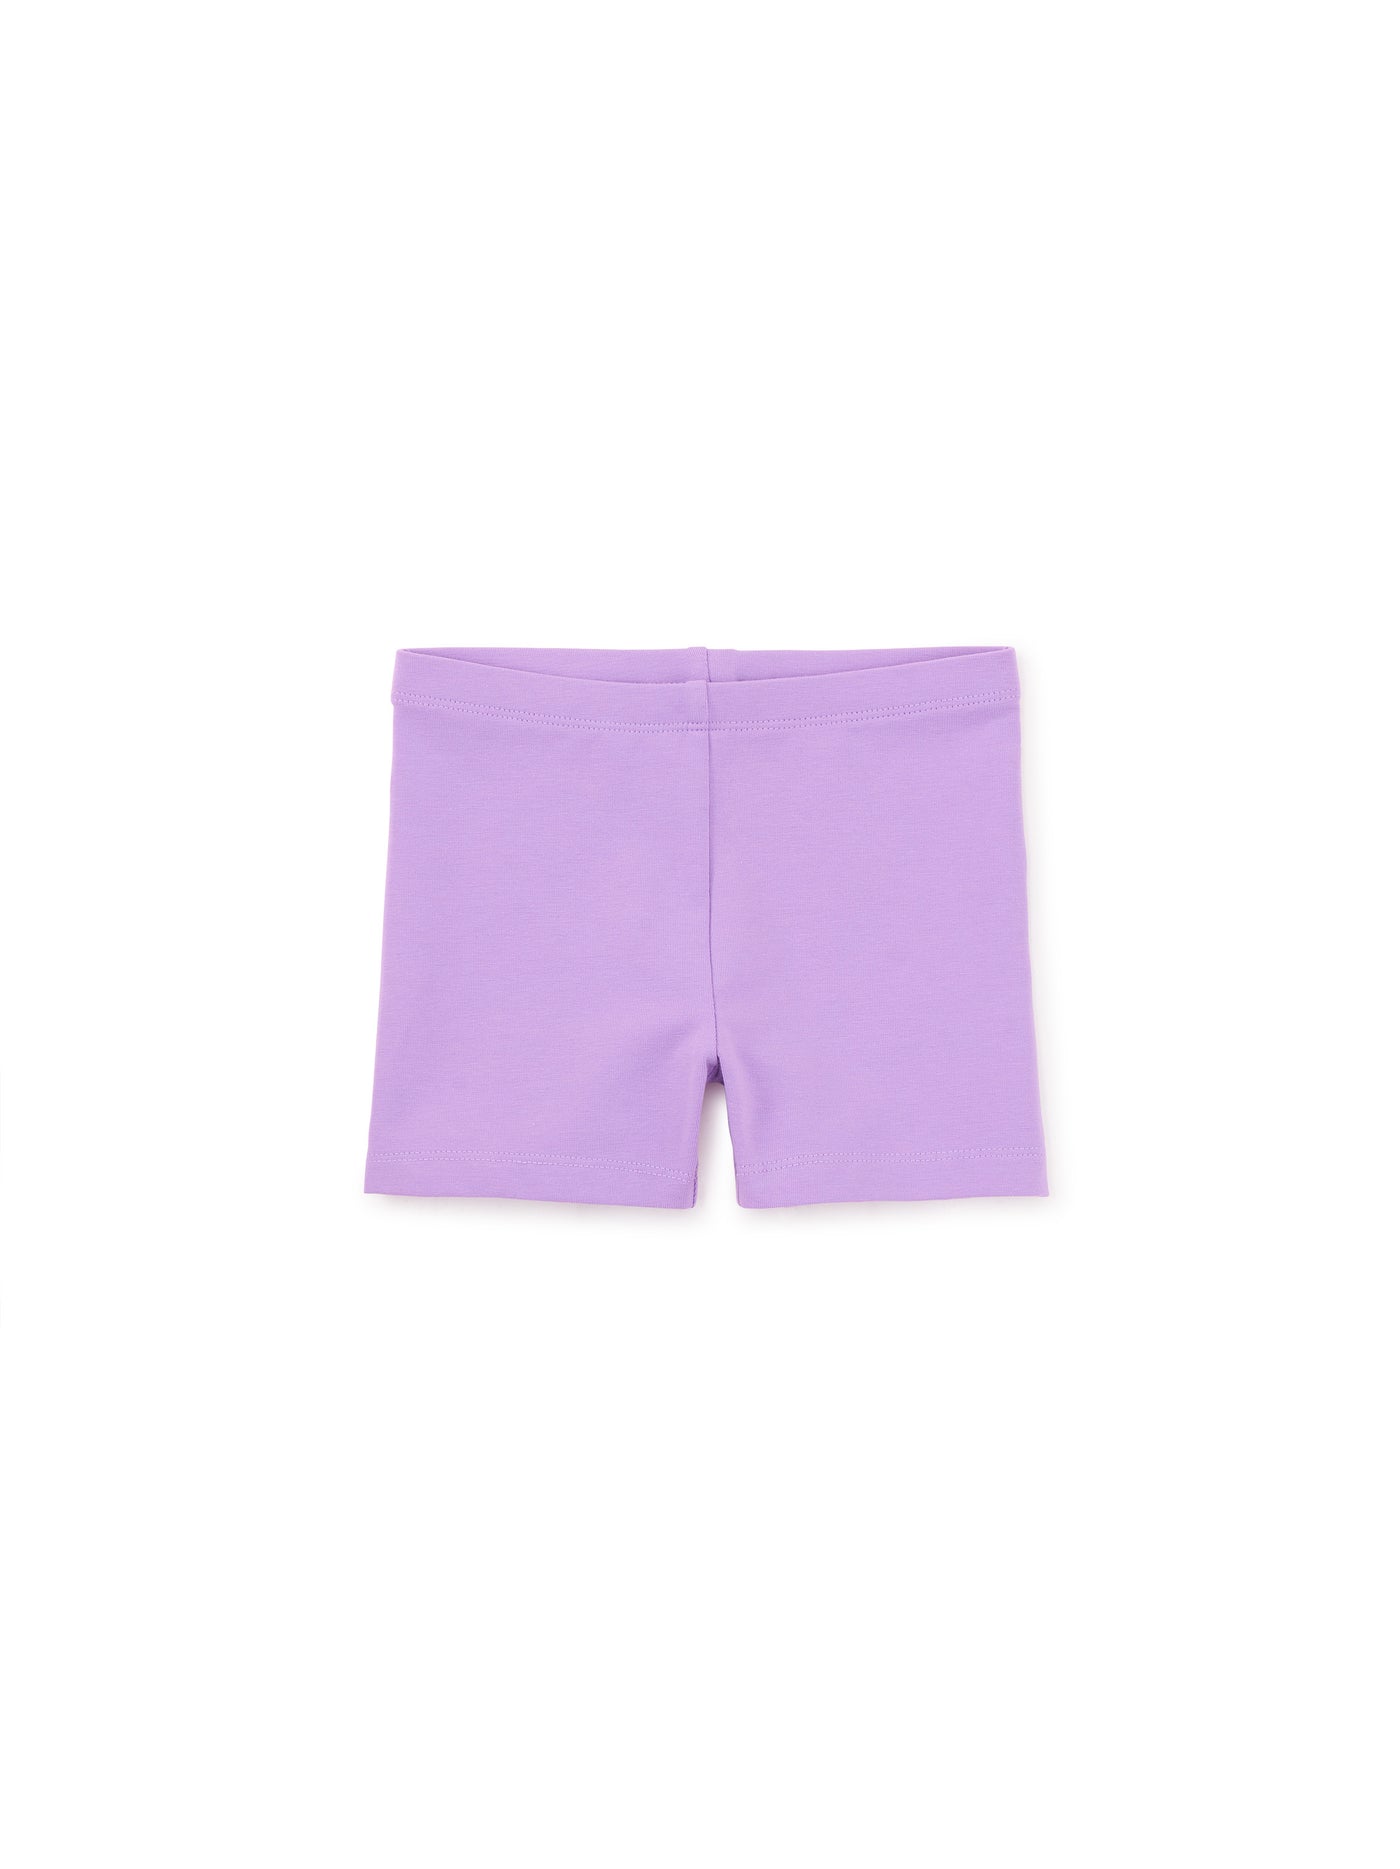 Sommersault Shorts in African Violet